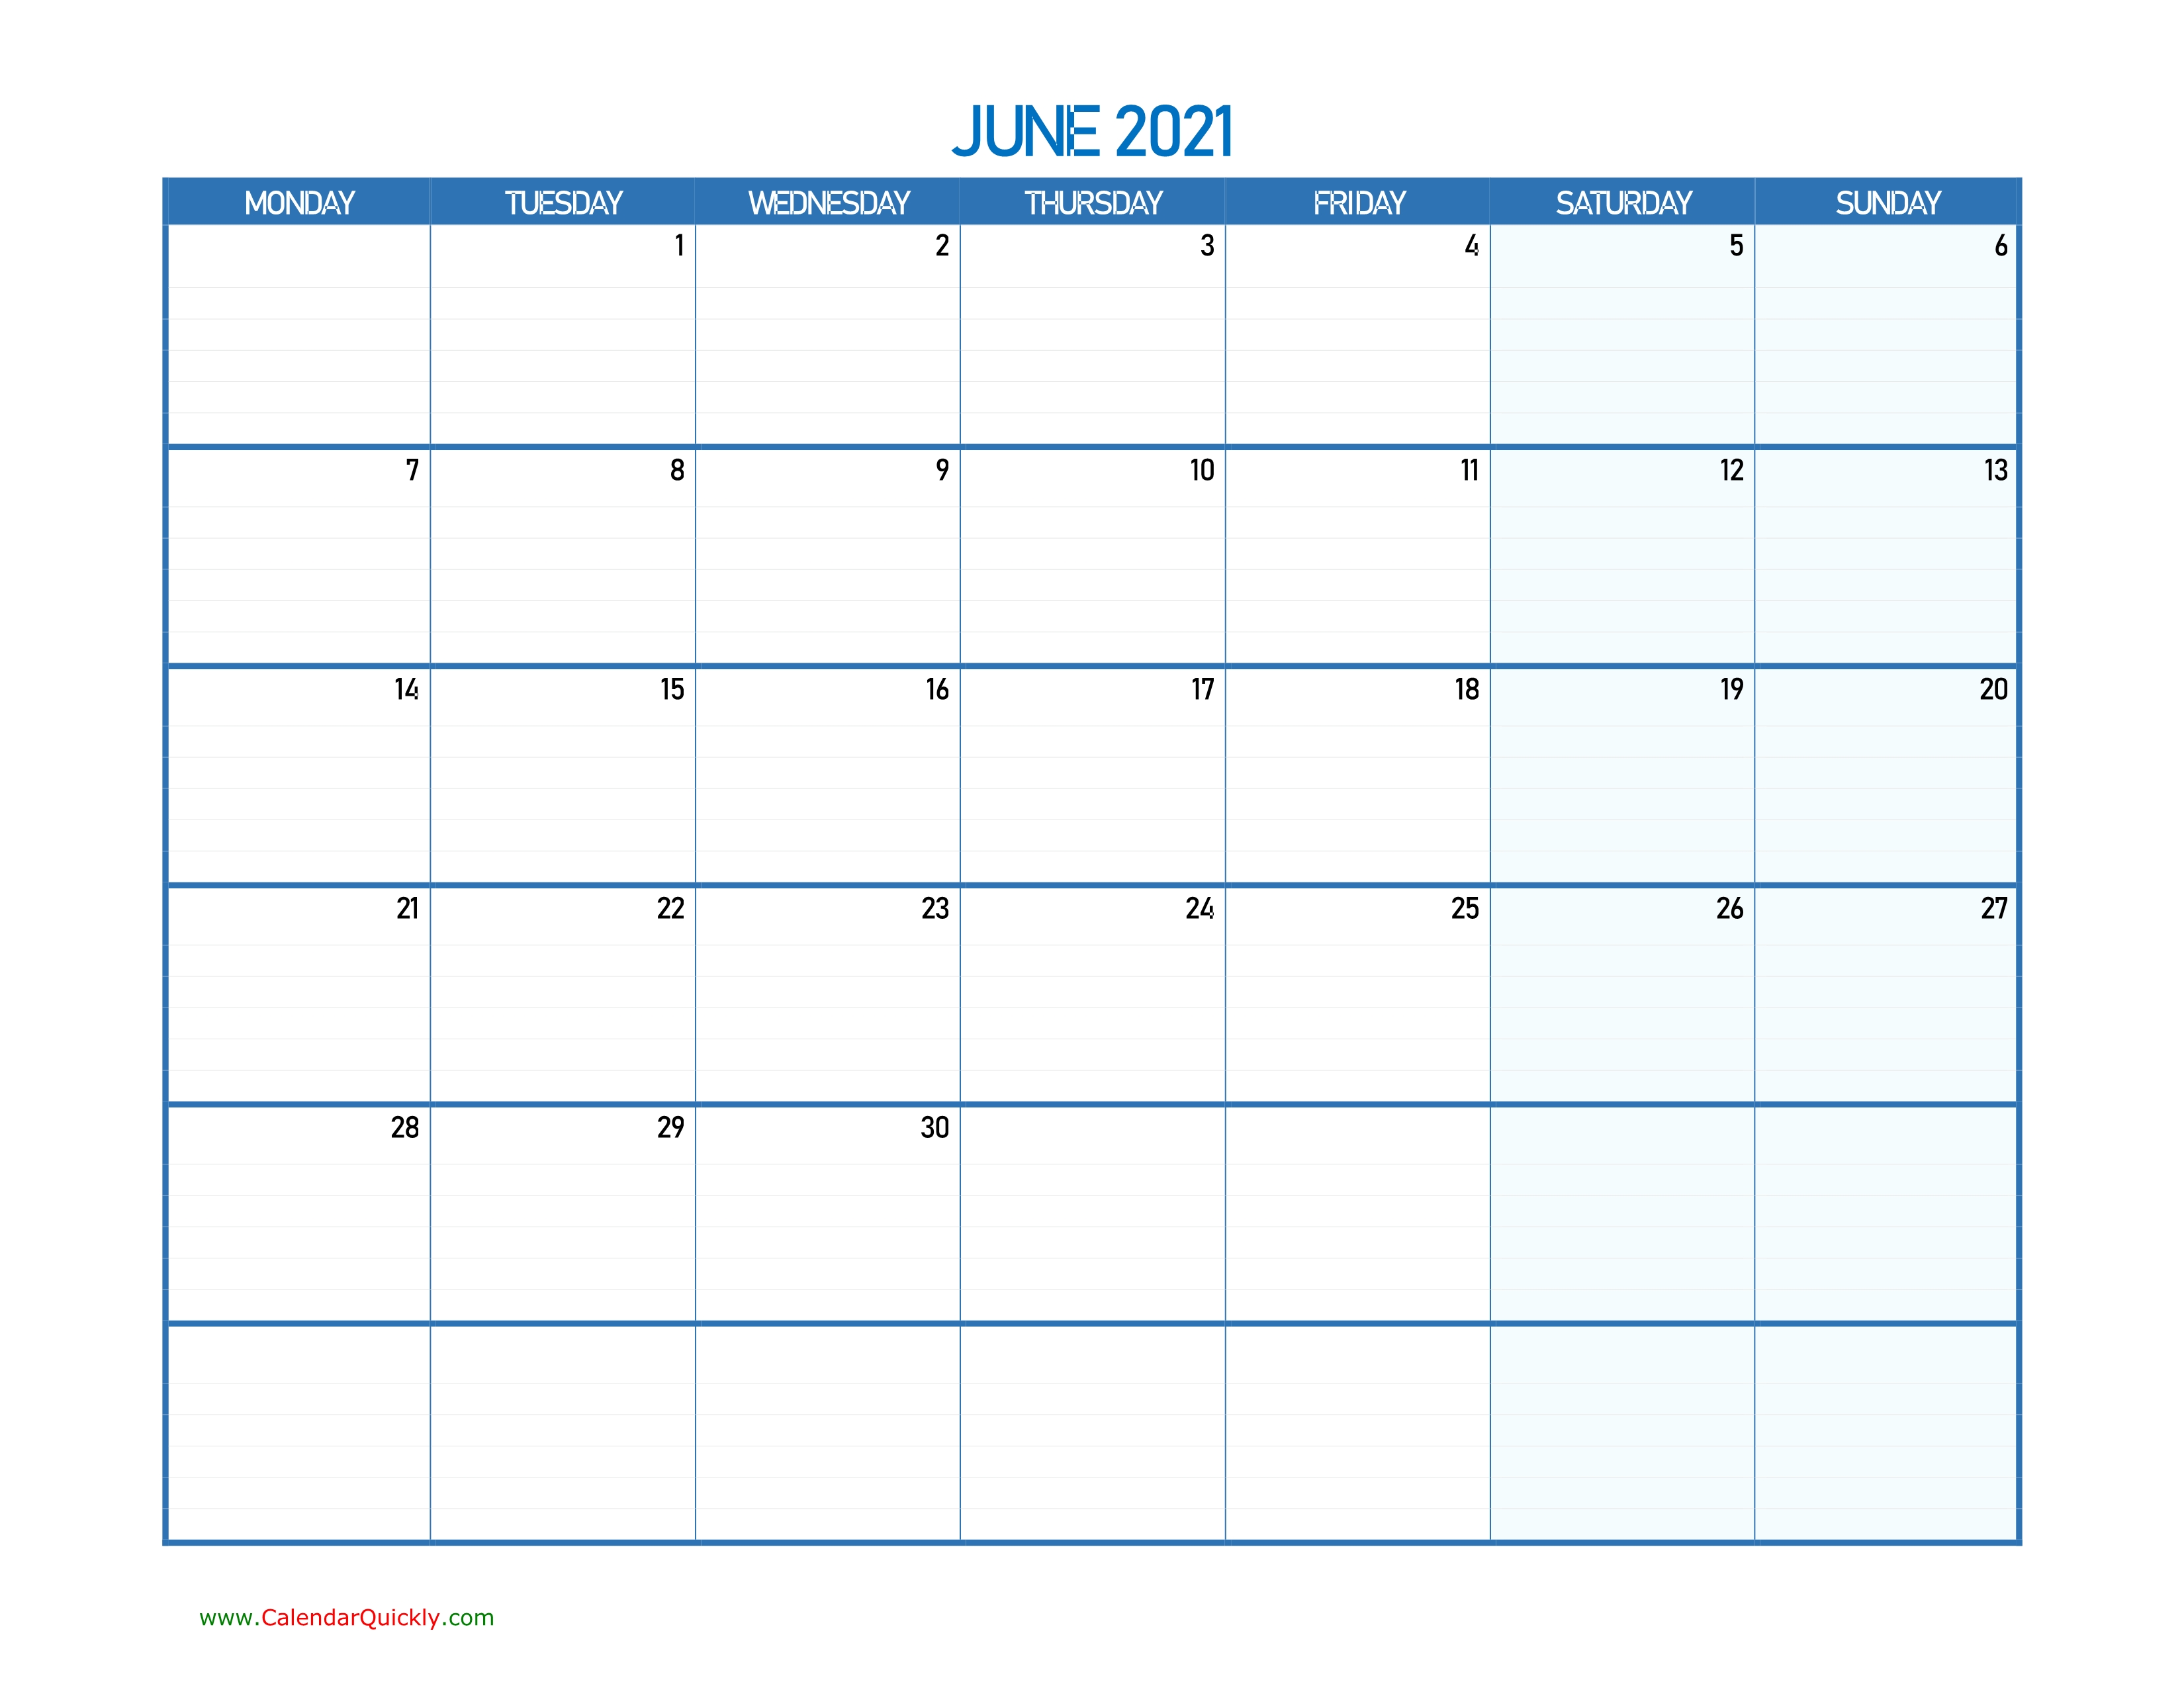 June Monday 2021 Blank Calendar | Calendar Quickly Blank June 2021 Calendar Pdf